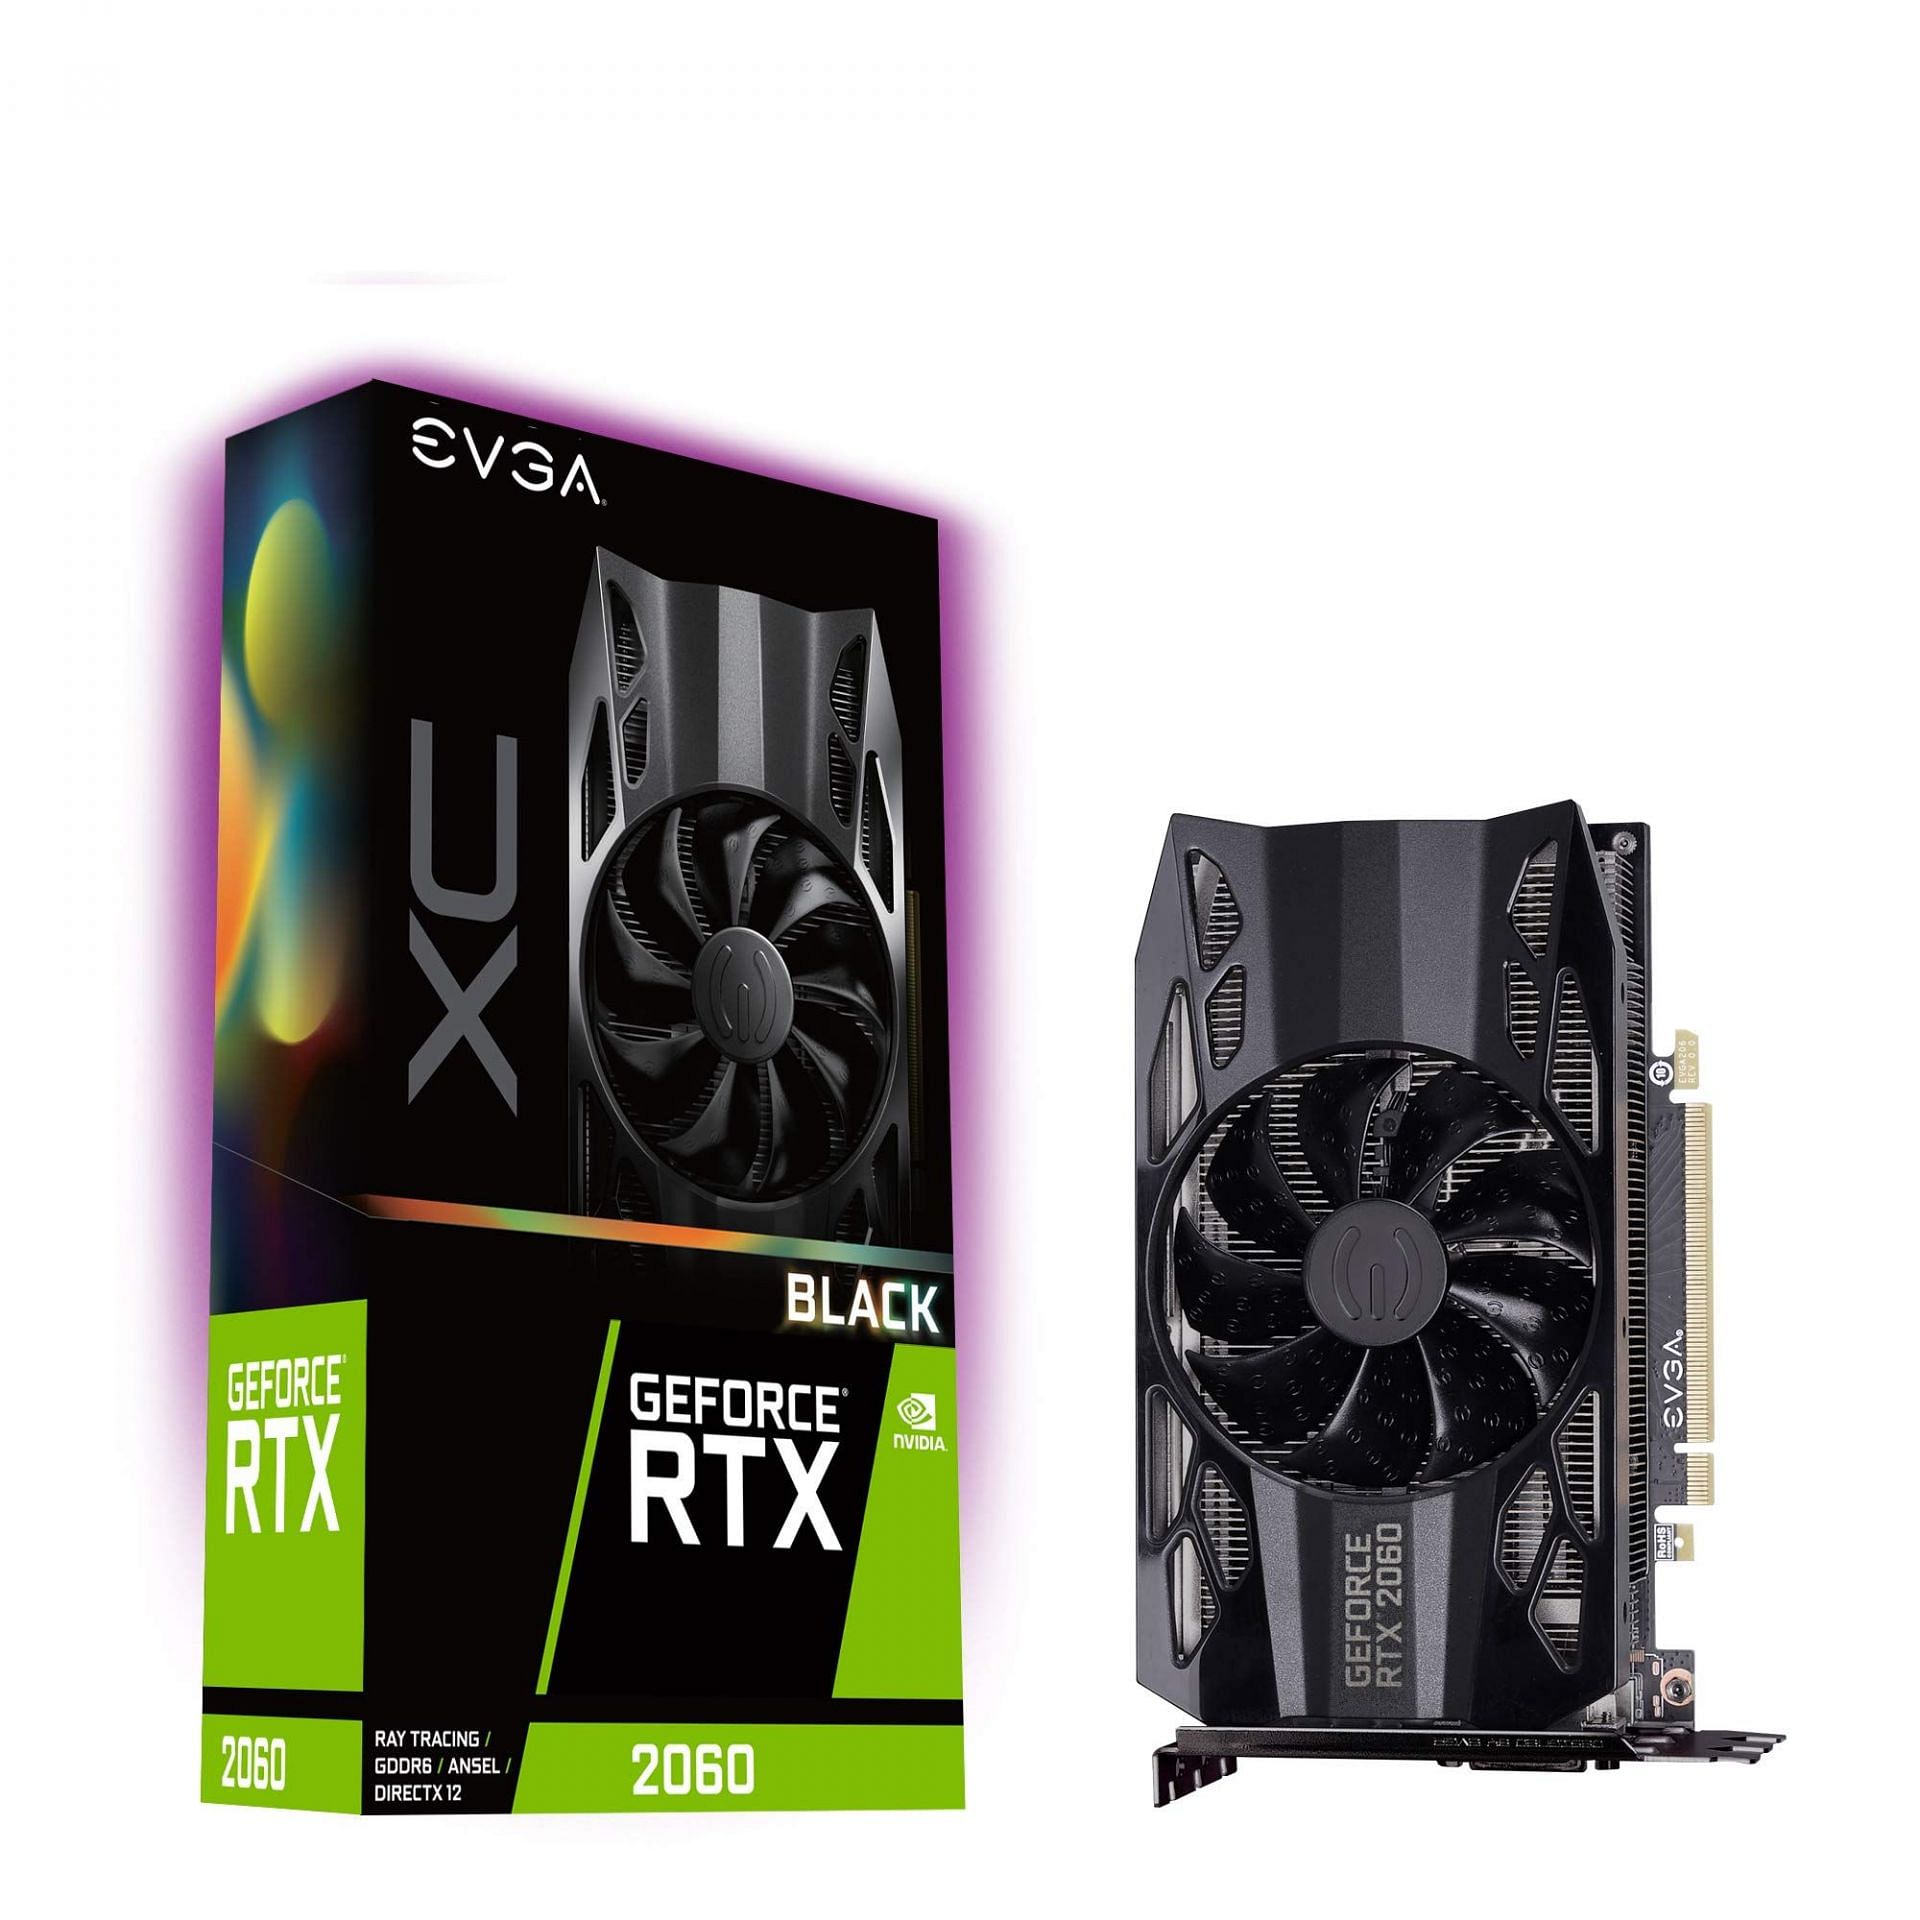 The fourth best low-profile graphic card - EVGA GeForce RTX 2060 XC Black Edition (Image via Amazon)